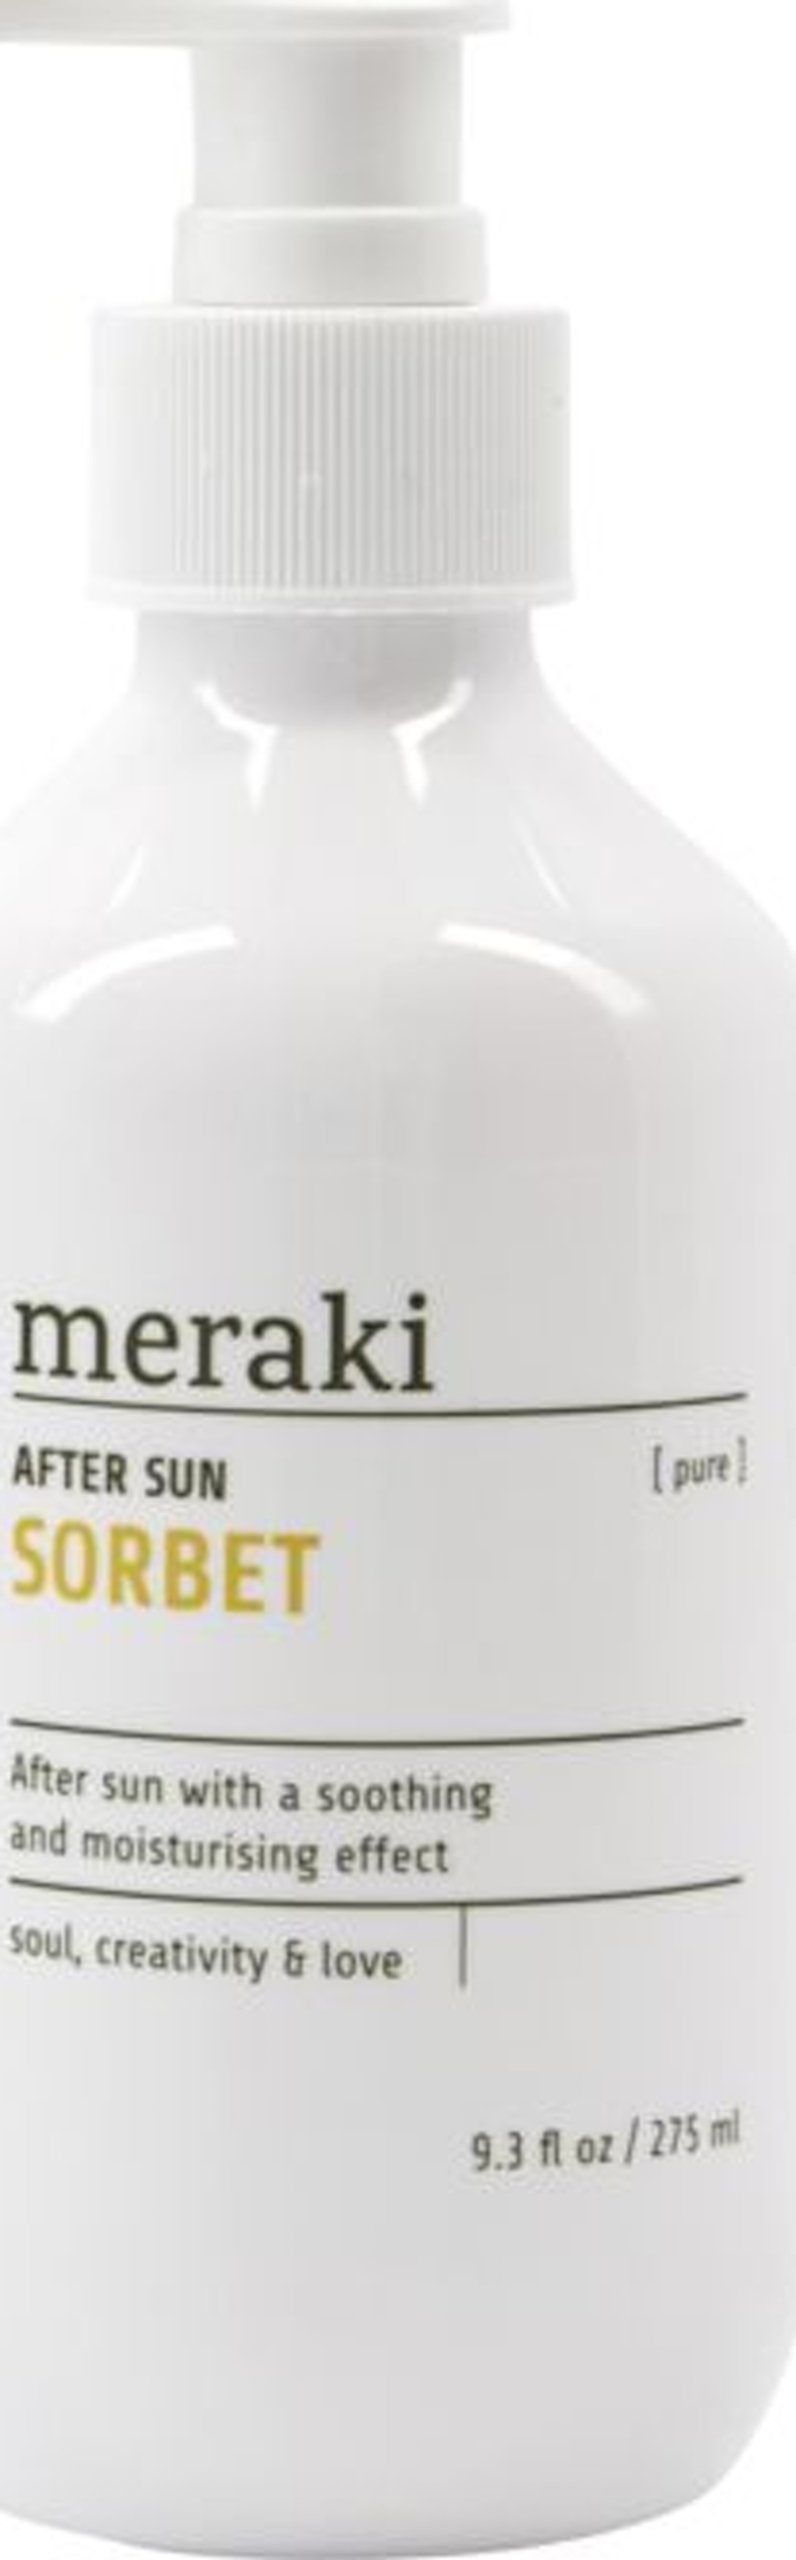 Se Pure, After sun sorbet by Meraki (D: 6 cm. x H: 16 cm., Hvid/Gul) hos Likehome.dk